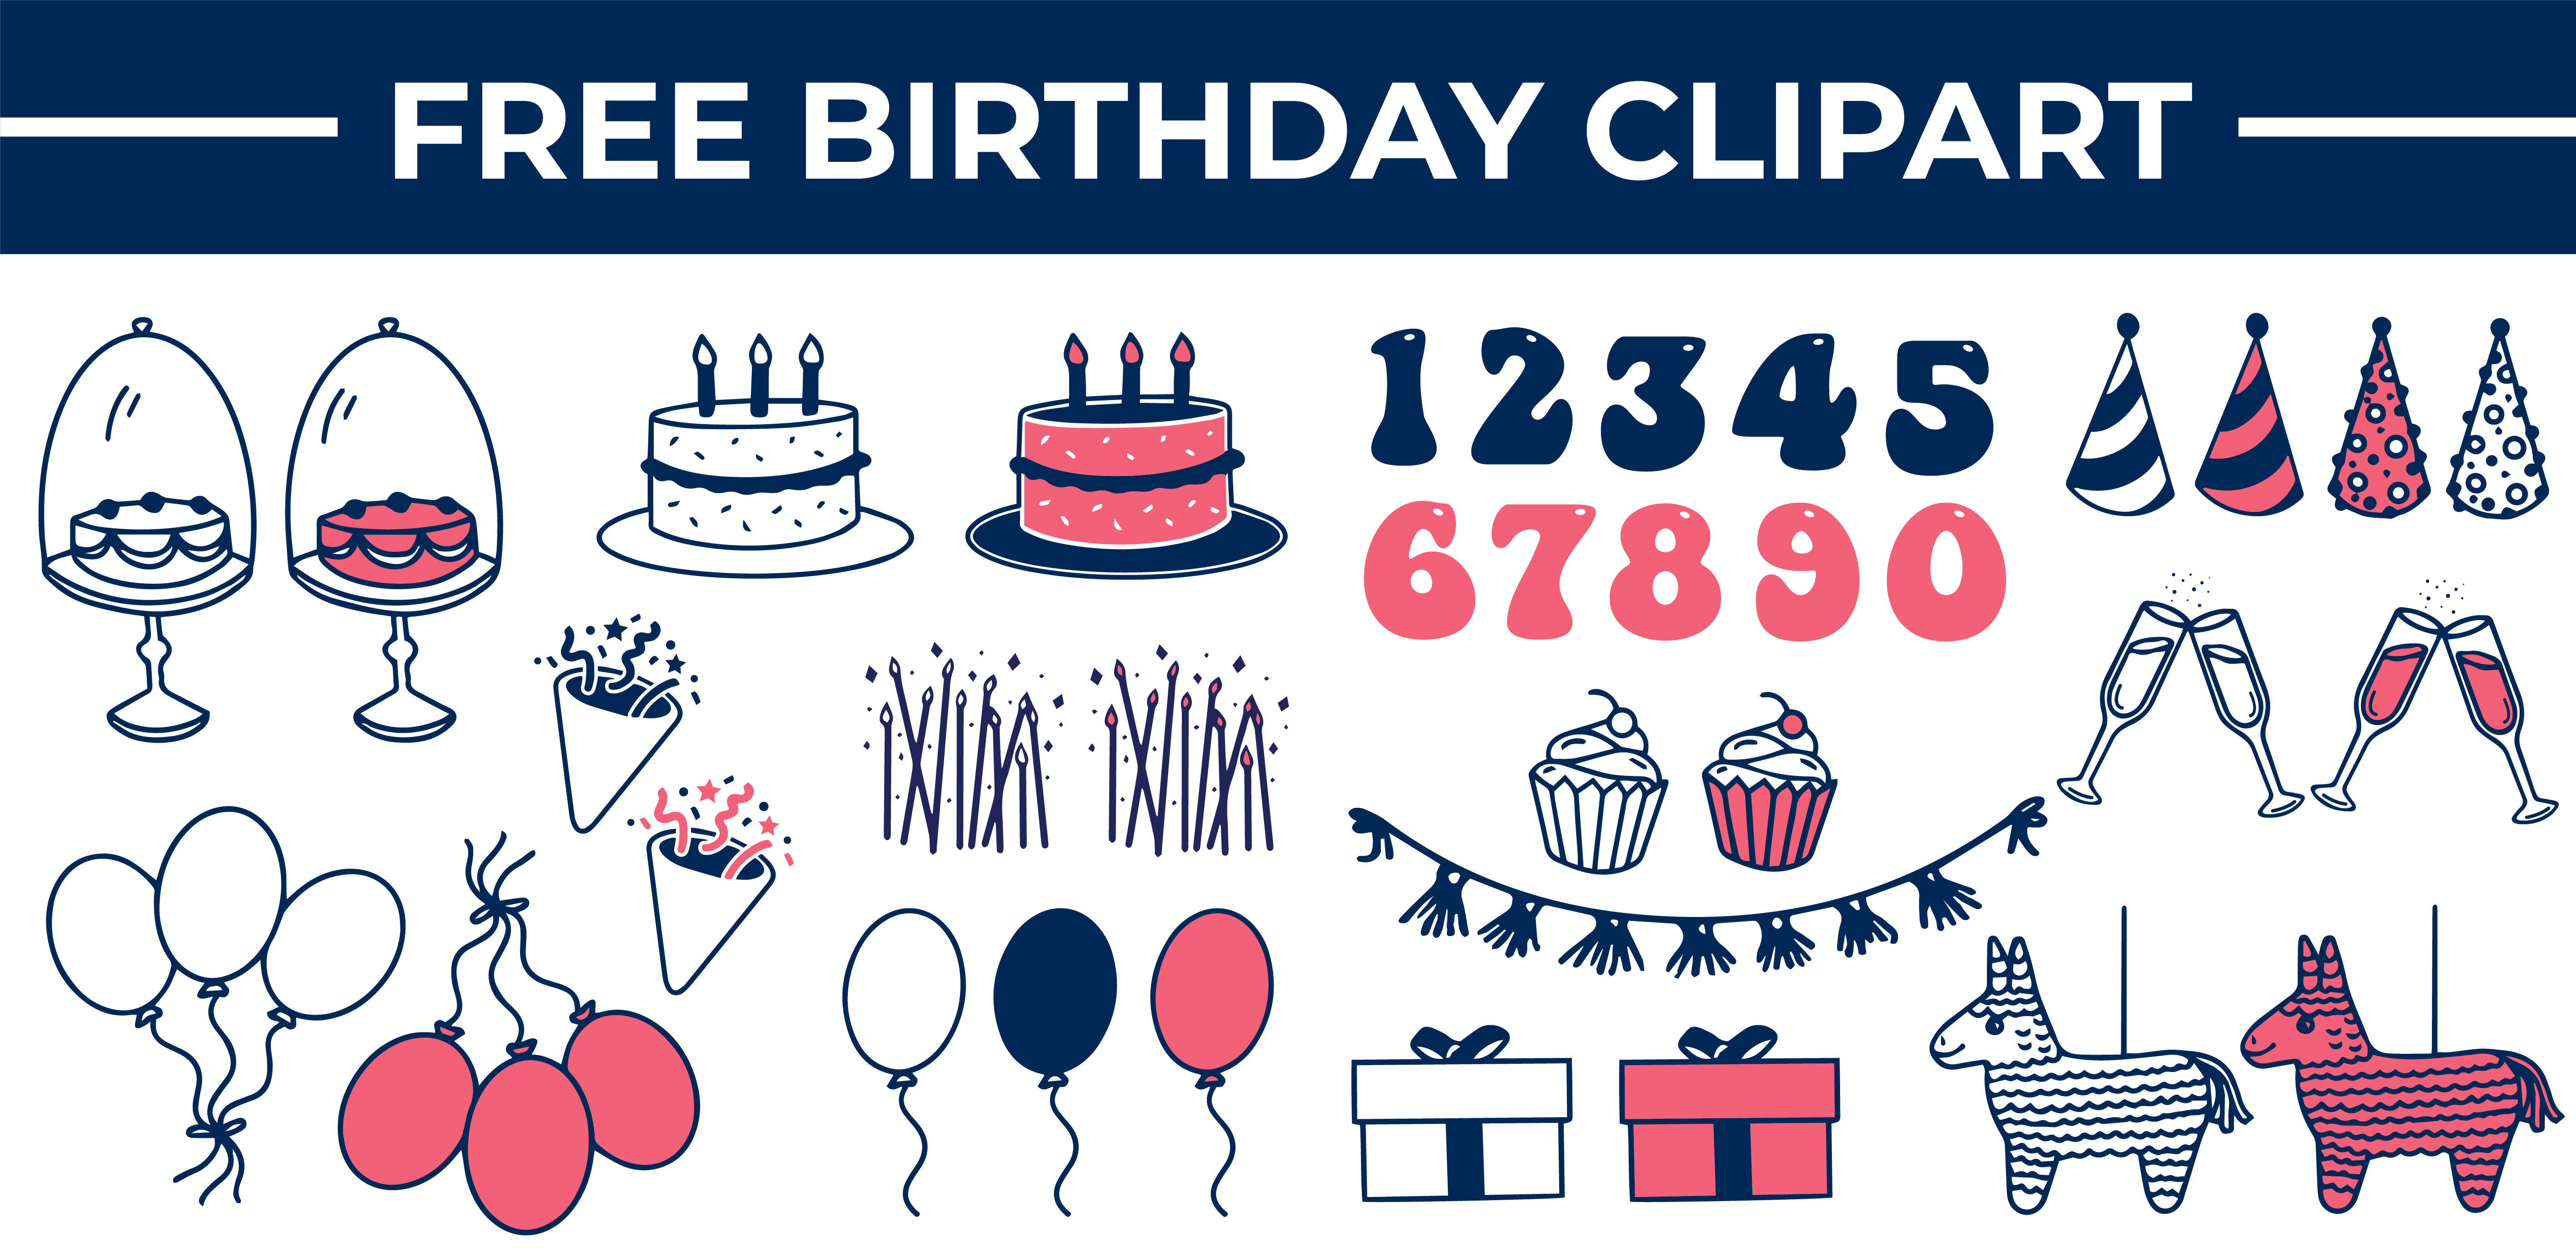 BirthdayClipart-BlogPost1-02